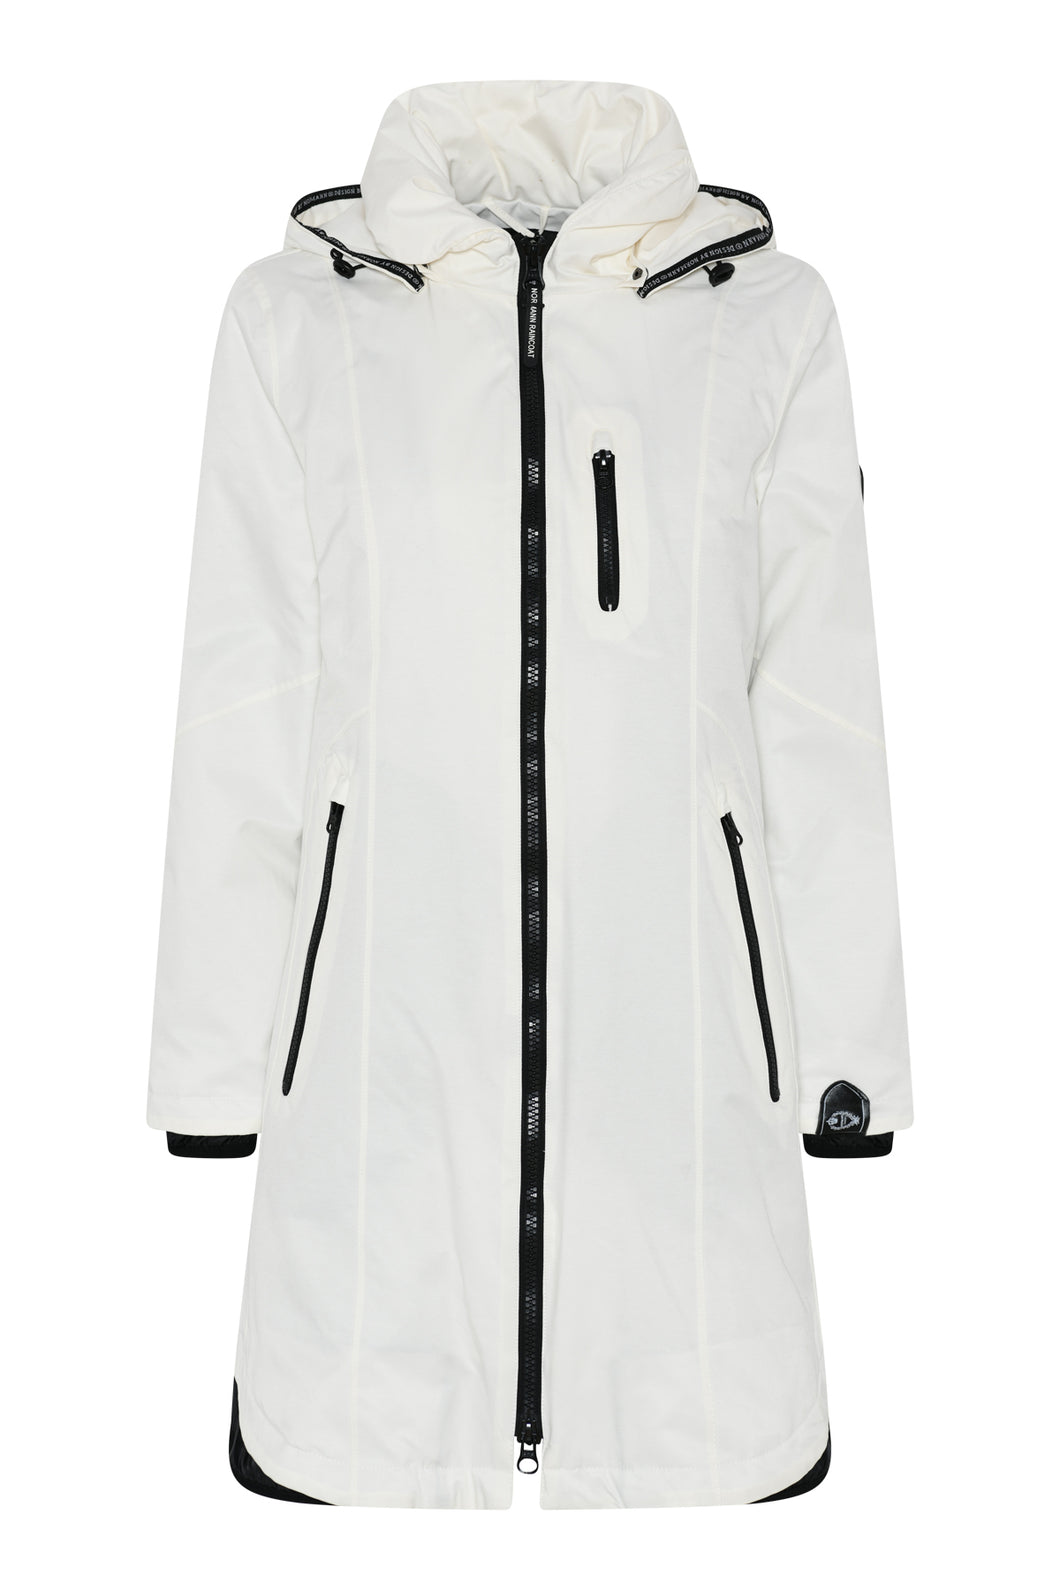 7922- Winter White Raincoat - Norman